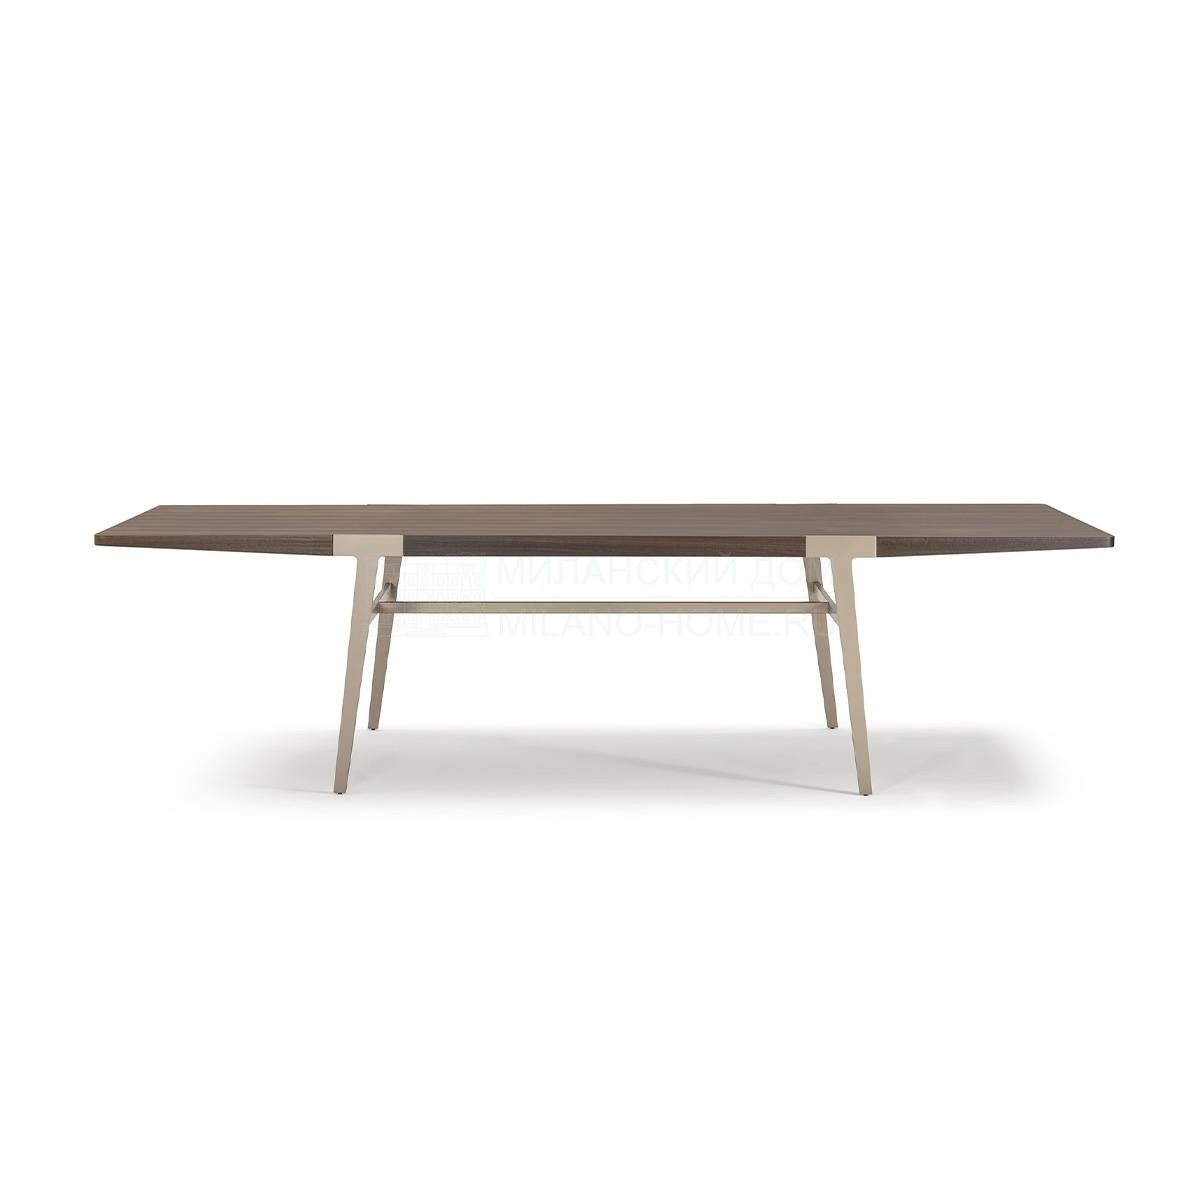 Обеденный стол Domus rectangular table из Италии фабрики TURRI